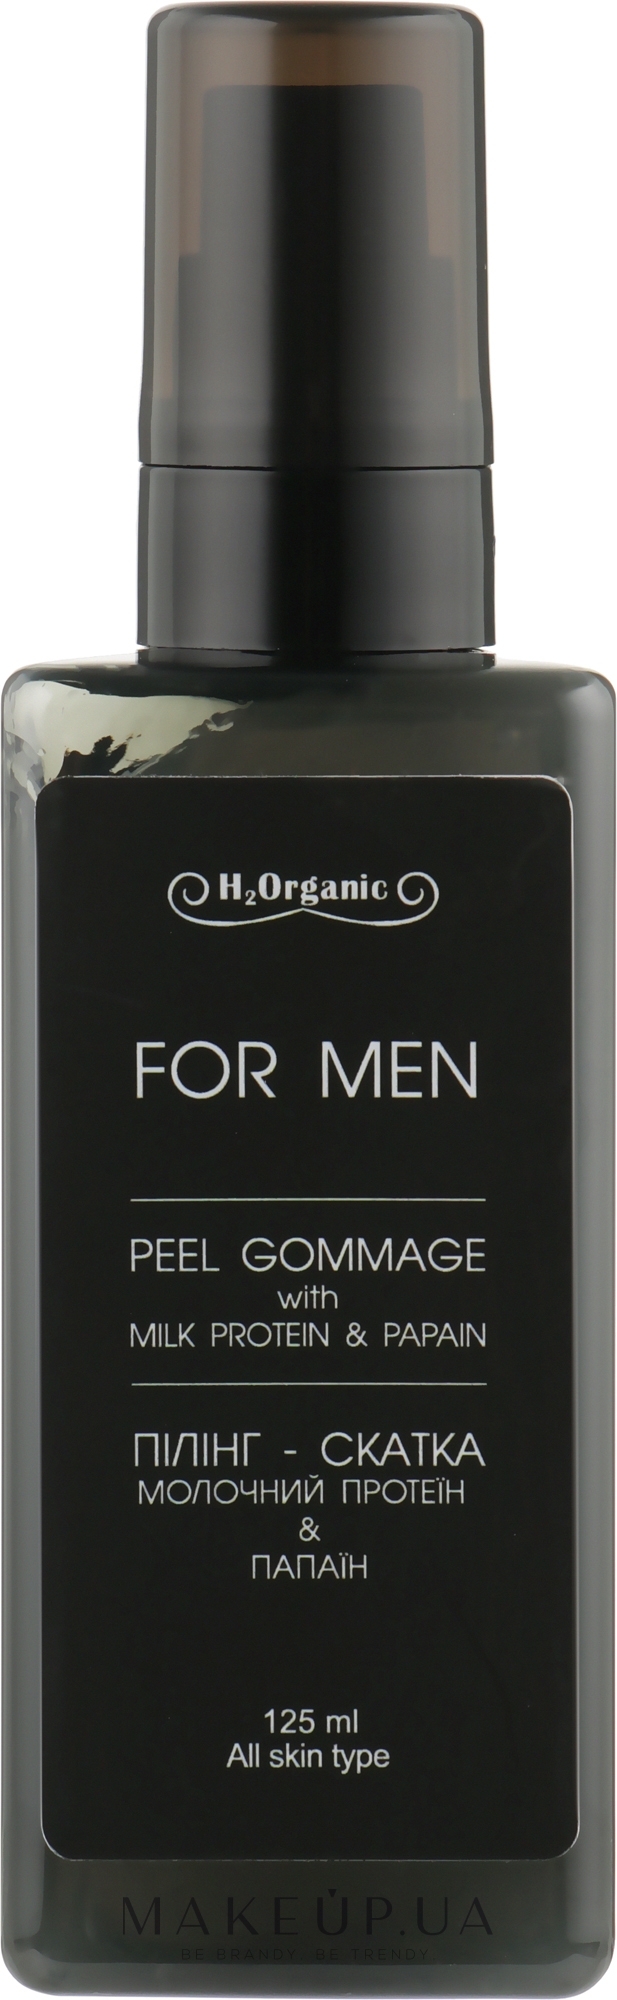 Пілінг-скатка "Молочний протеїн і папаїн" - H2Organic Peel Gommage with Milk Protein & Papain For Men — фото 125ml